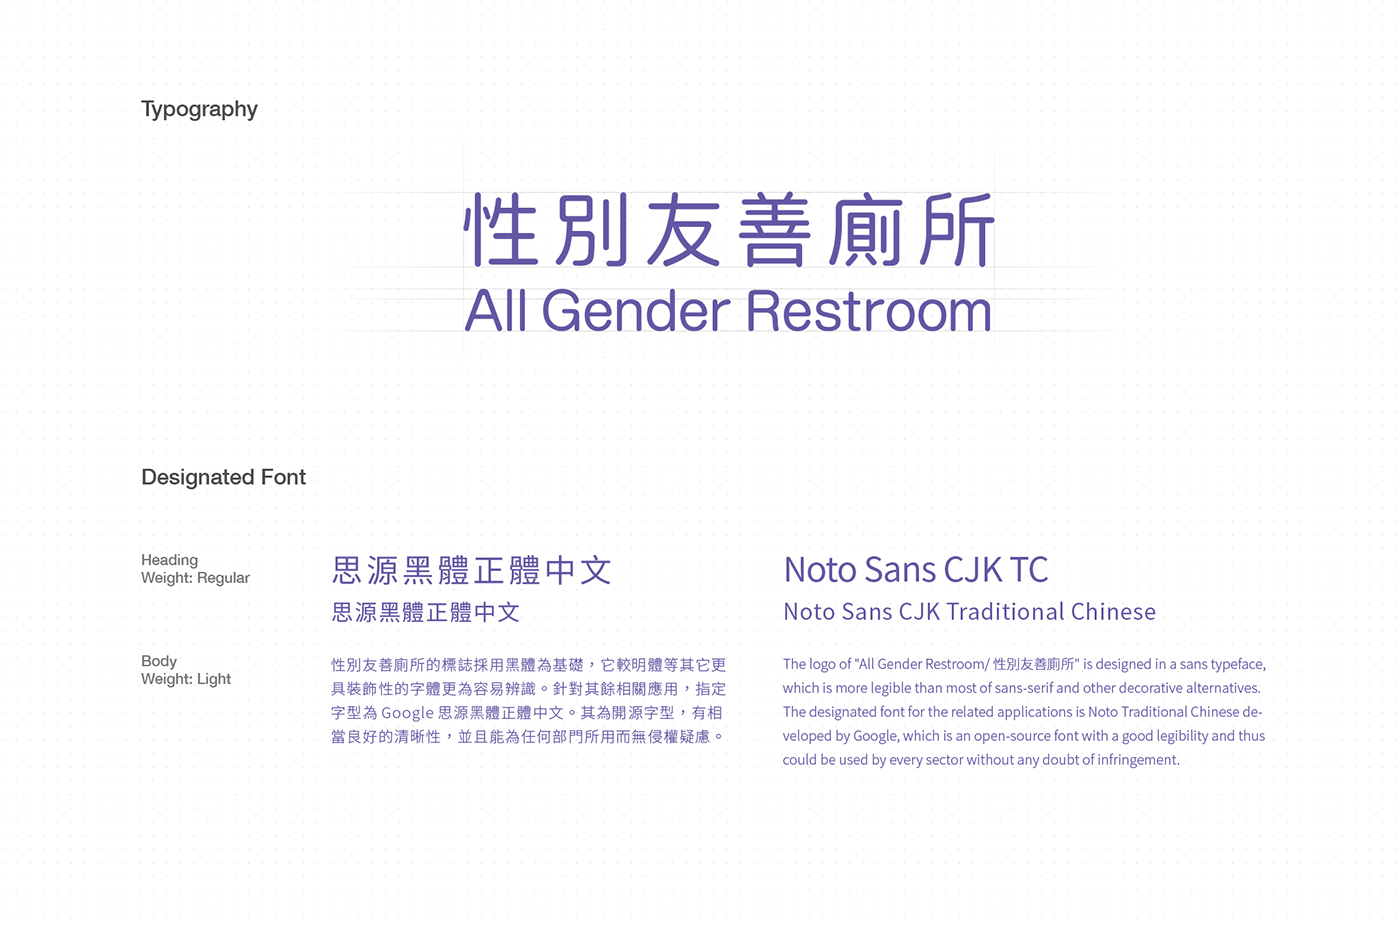 LGBTQ Restroom wayfinding social design